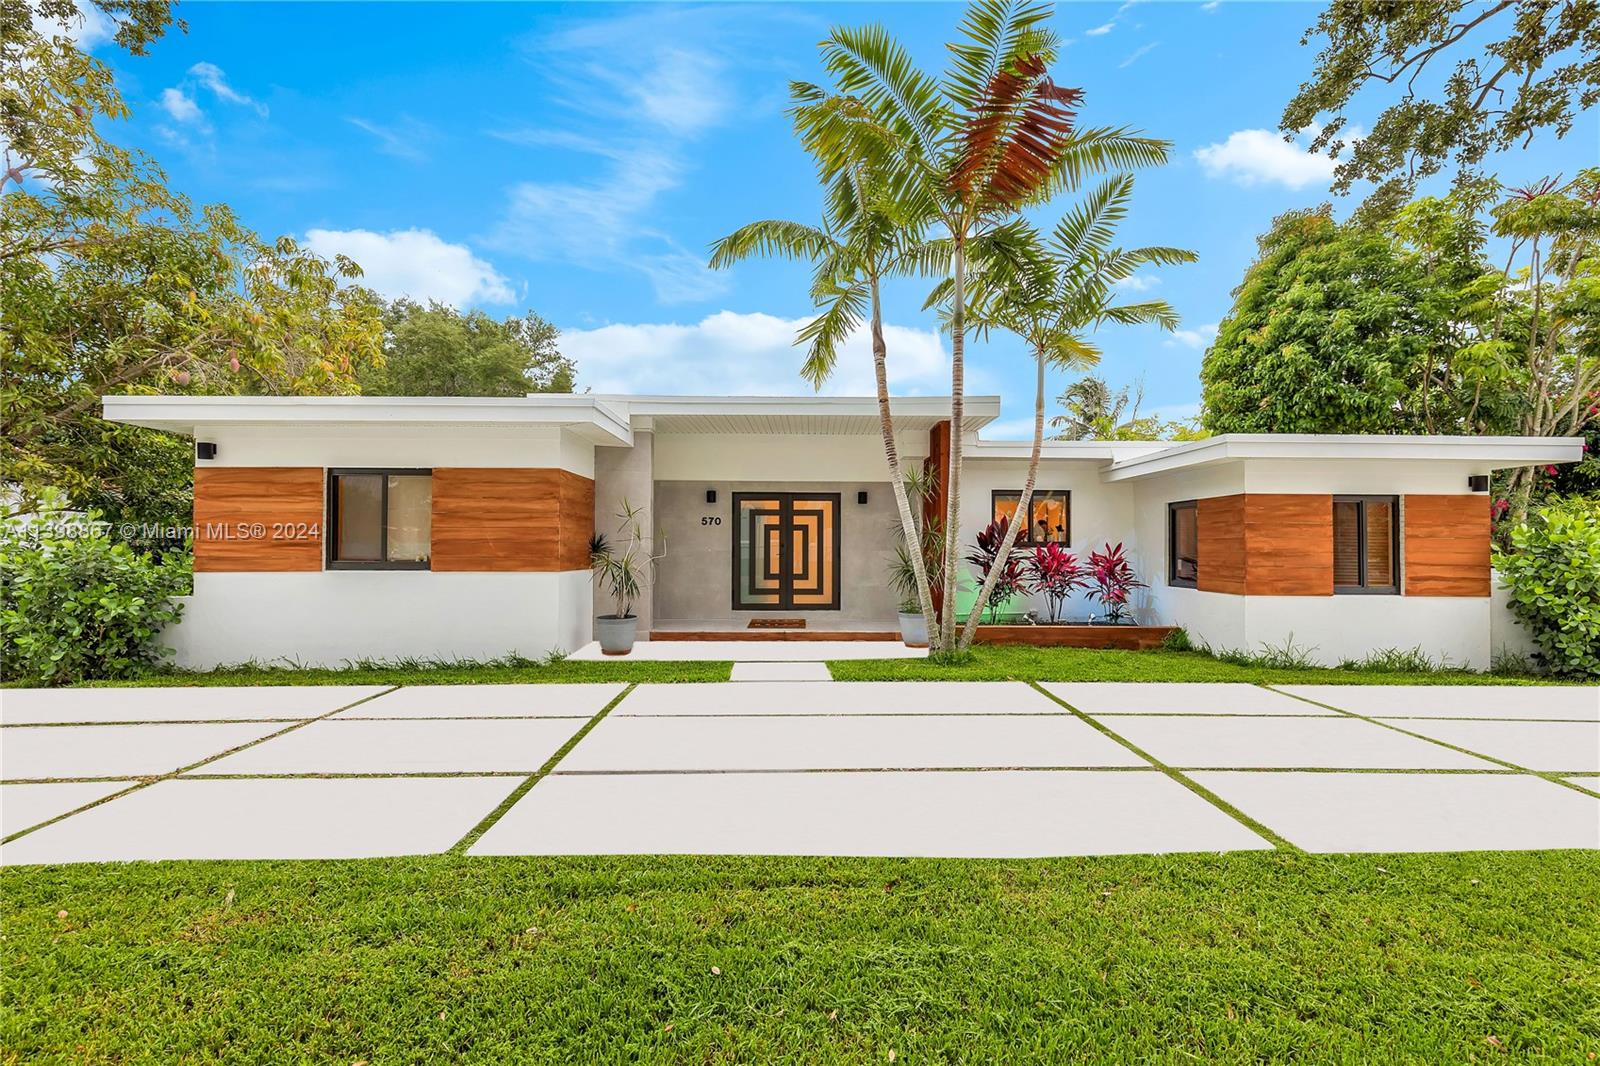 Property for Sale at 570 Ne 103rd St, Miami Shores, Miami-Dade County, Florida - Bedrooms: 5 
Bathrooms: 5  - $1,899,999